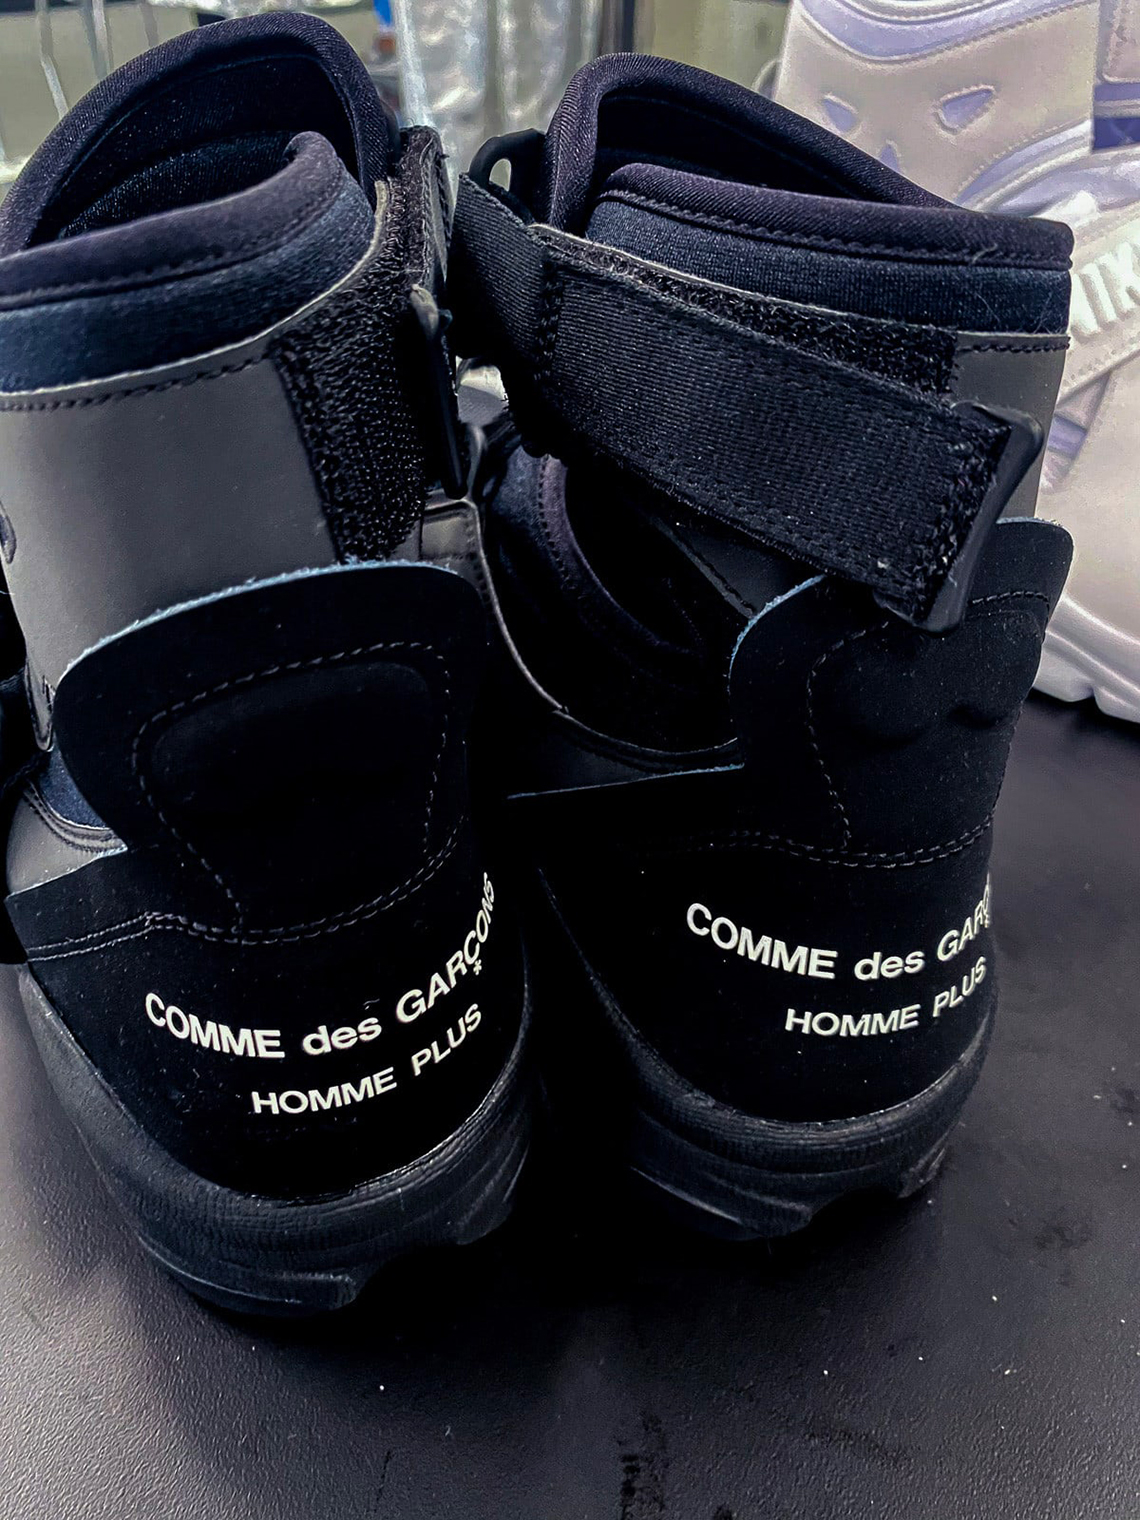 The Comme des Garçons x Nike Air Carnivore Collab Drops Soon